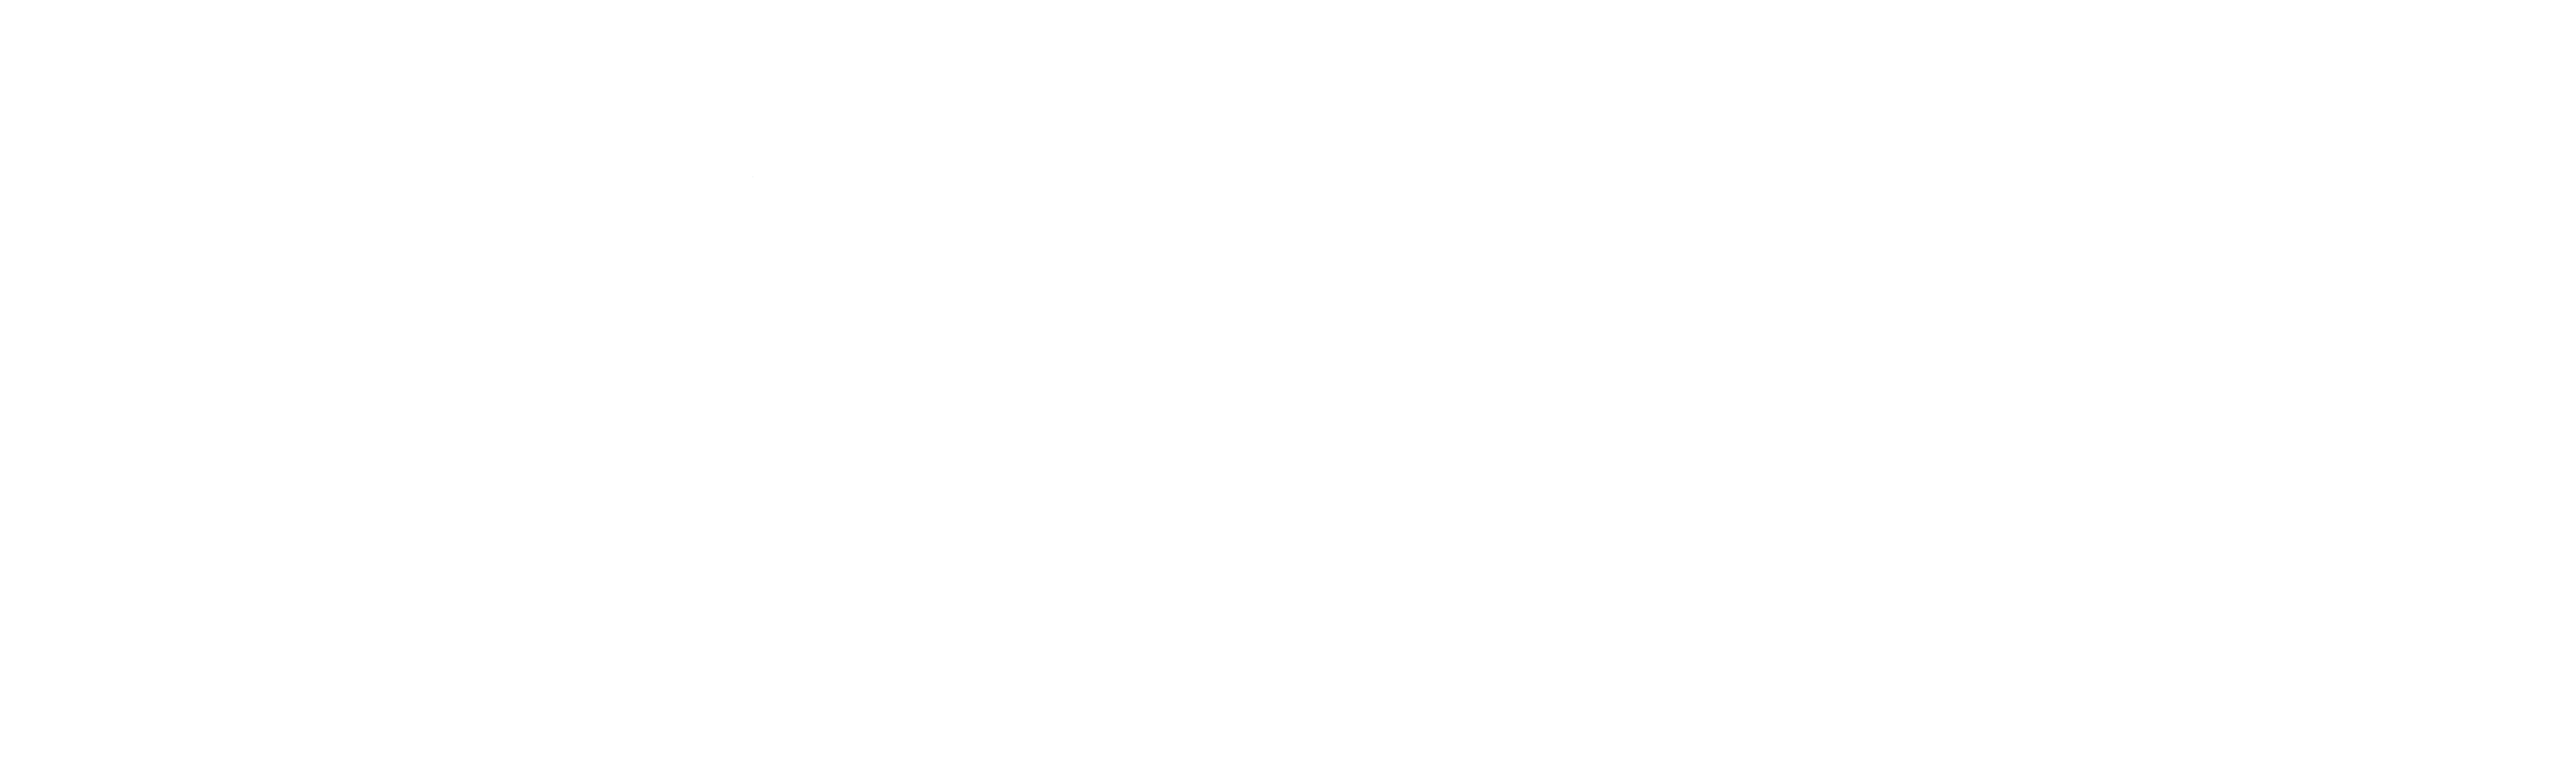 eVineyard_logo